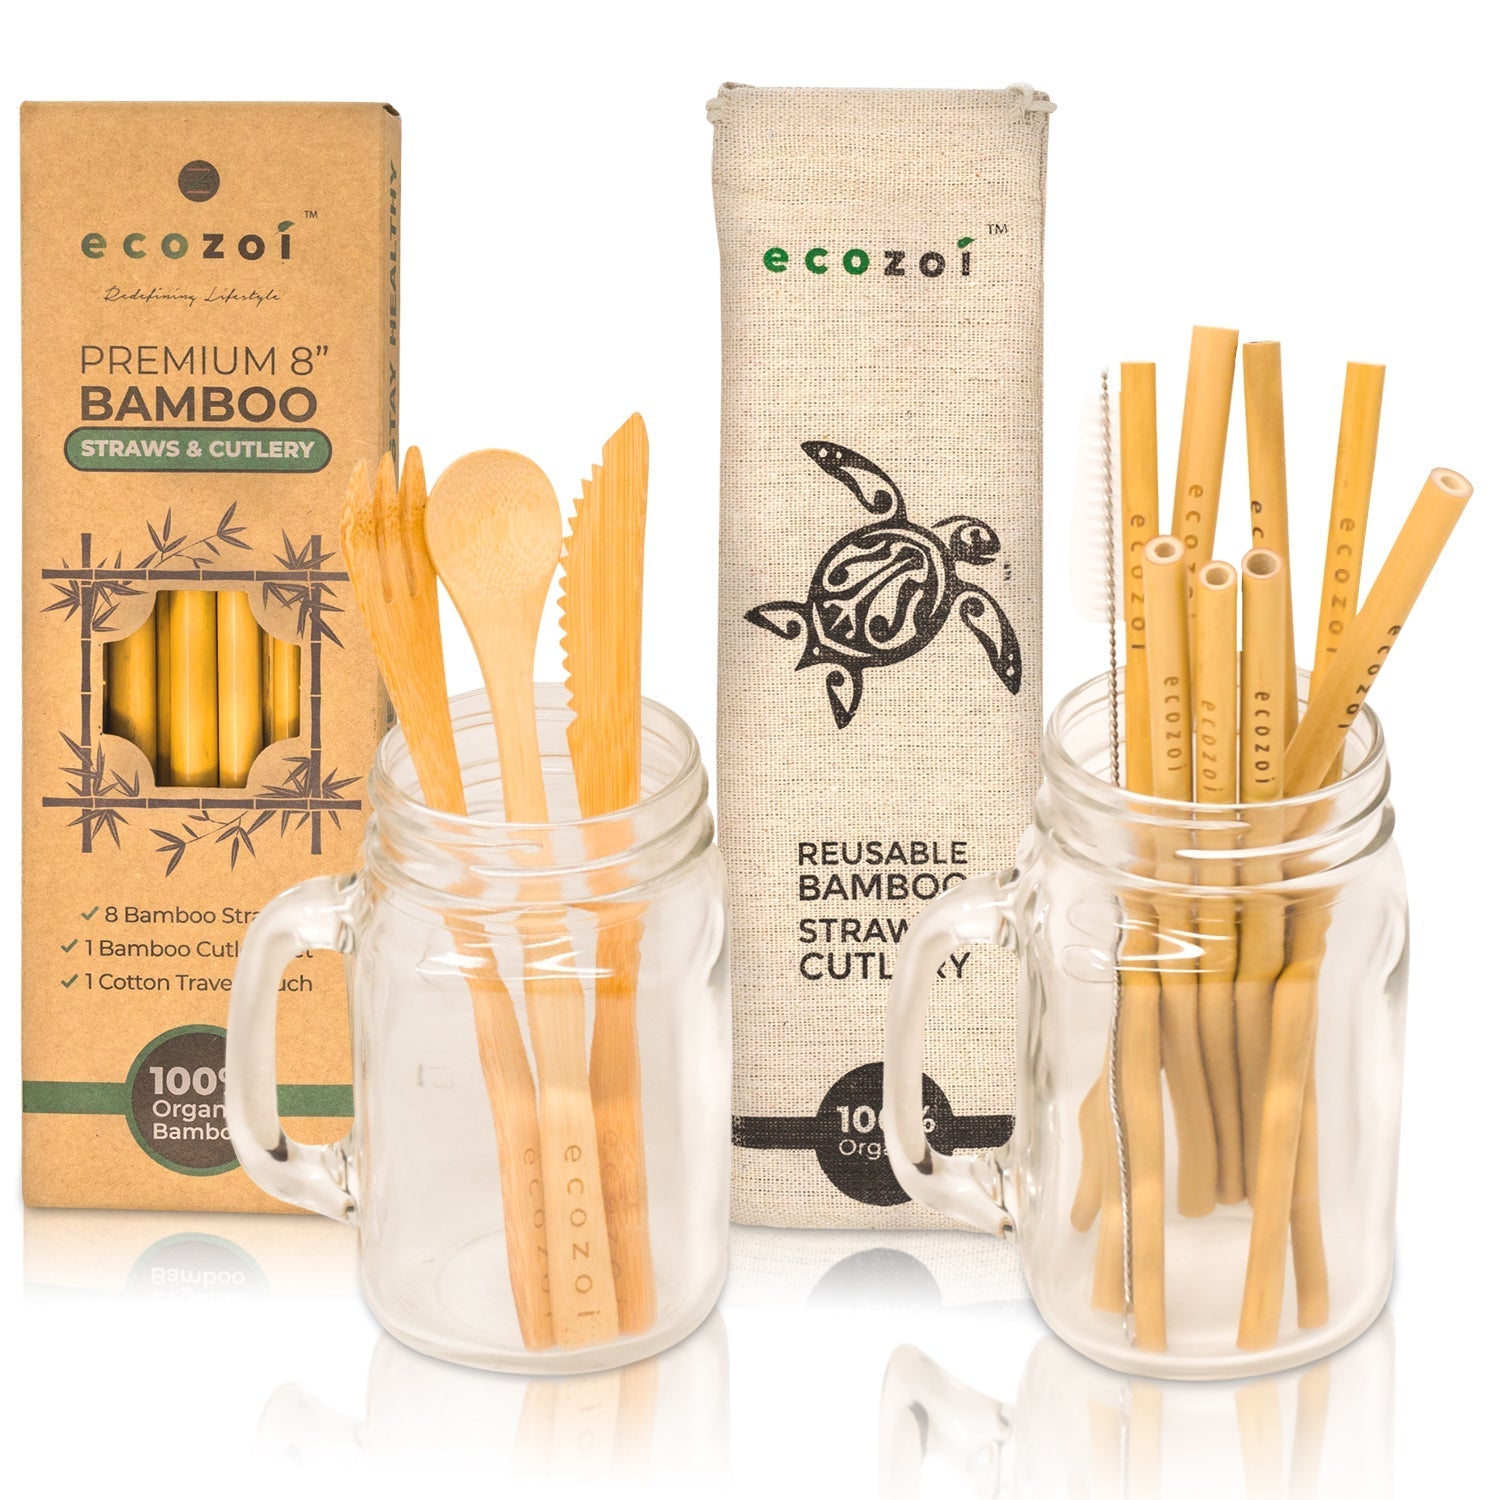 ecozoi Organic Bamboo Straws and Cutlery Set with Cotton Travel bag